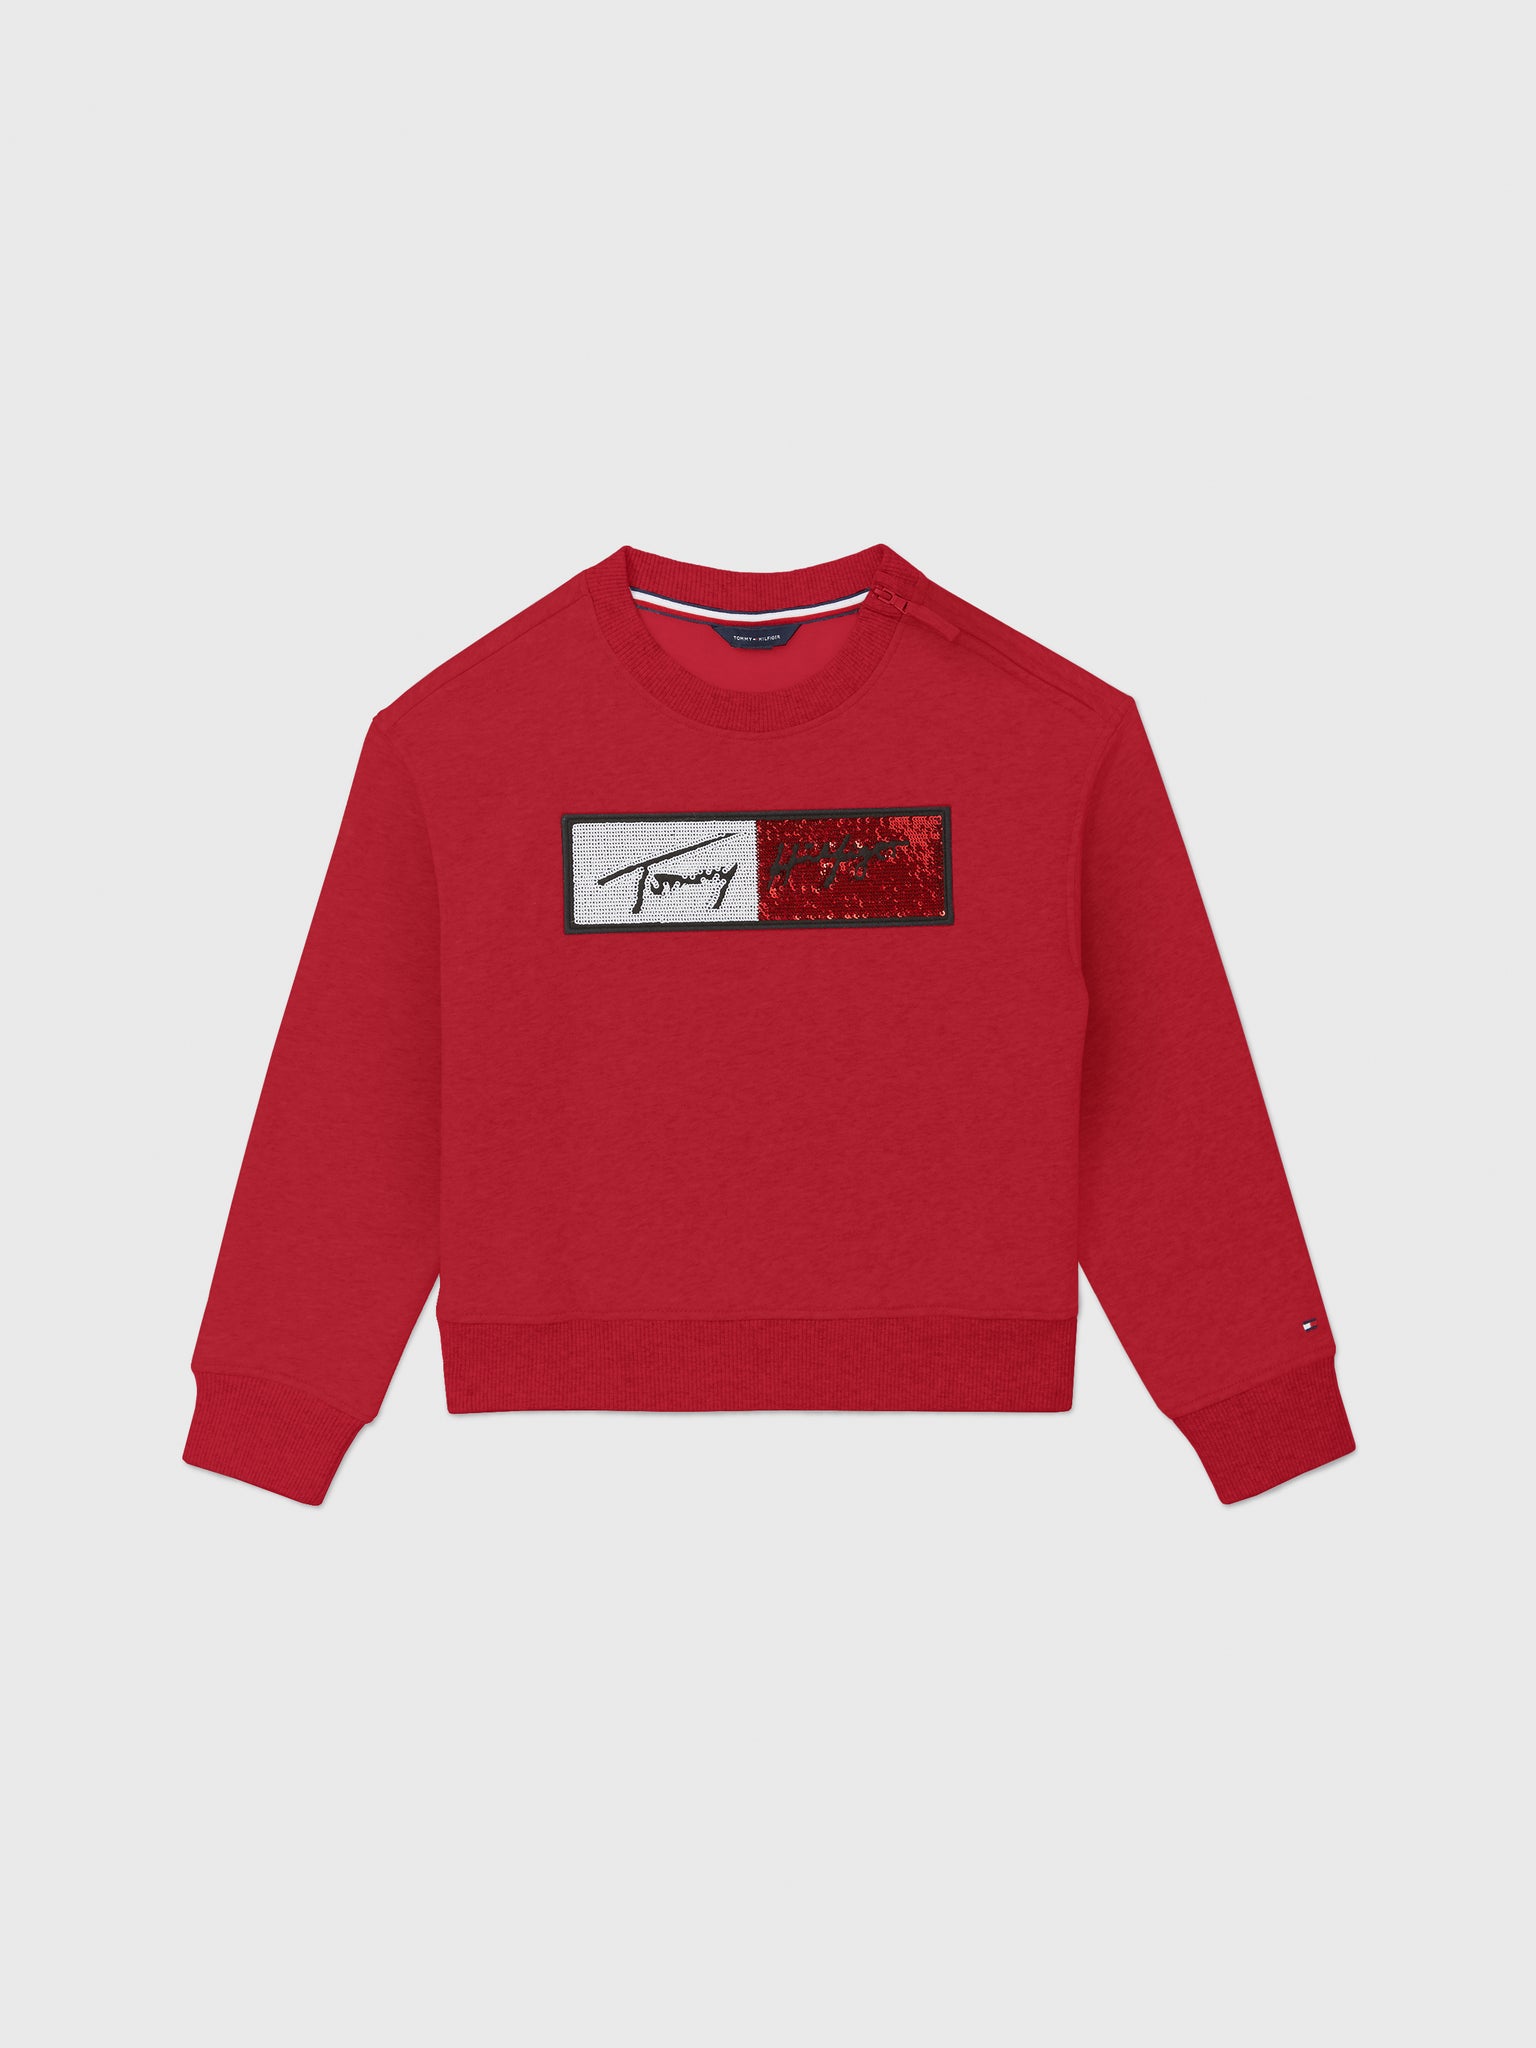 Tommy Flag Sweatshirt (Girls) - Red